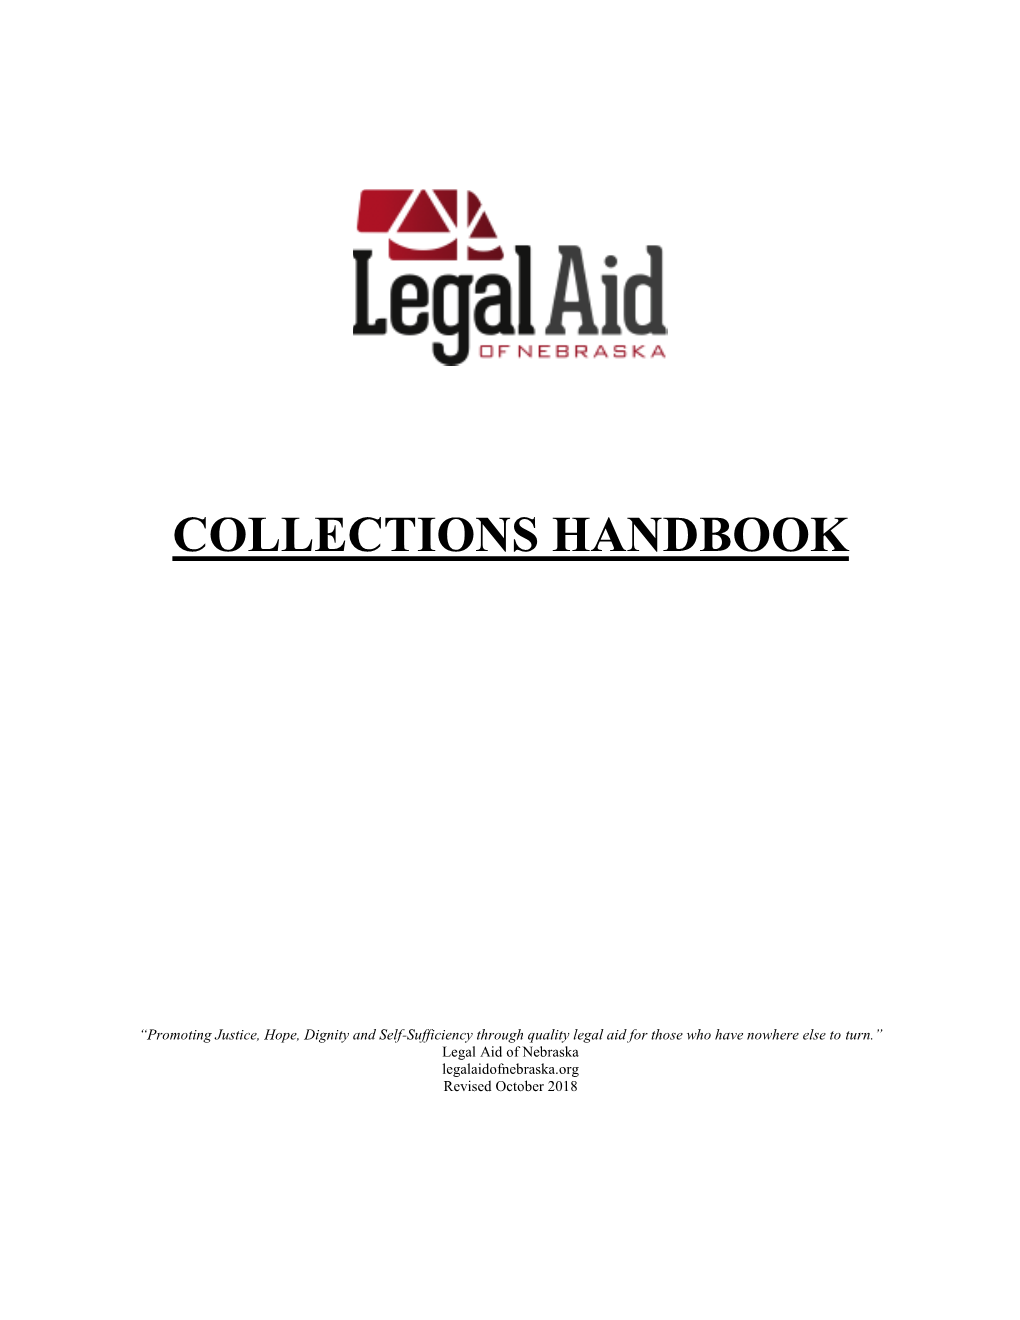 Collections Handbook